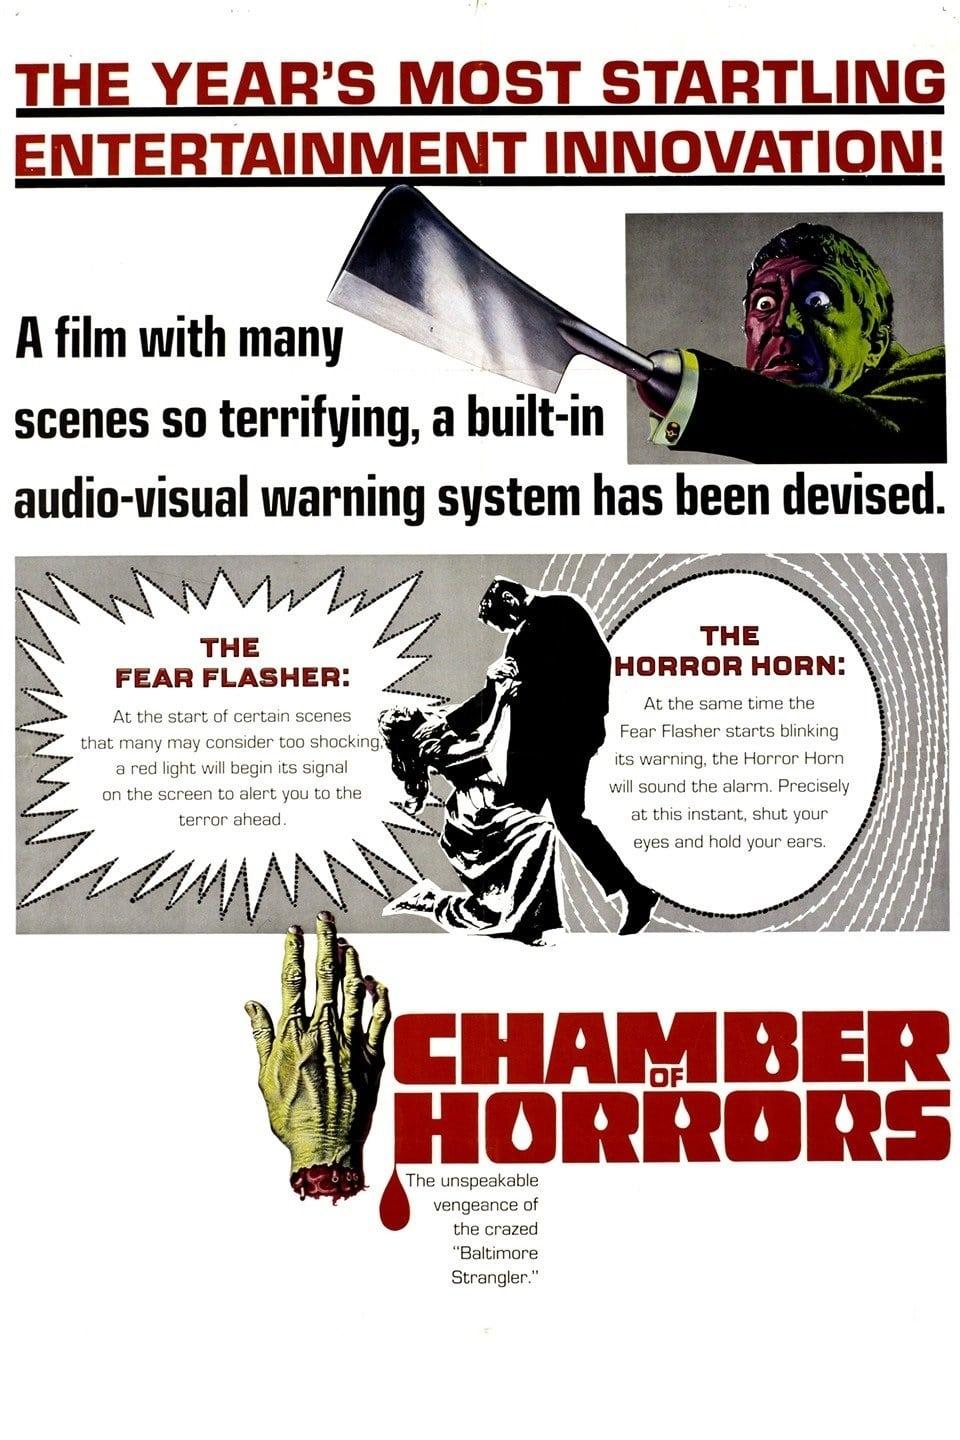 Chamber of Horrors poster